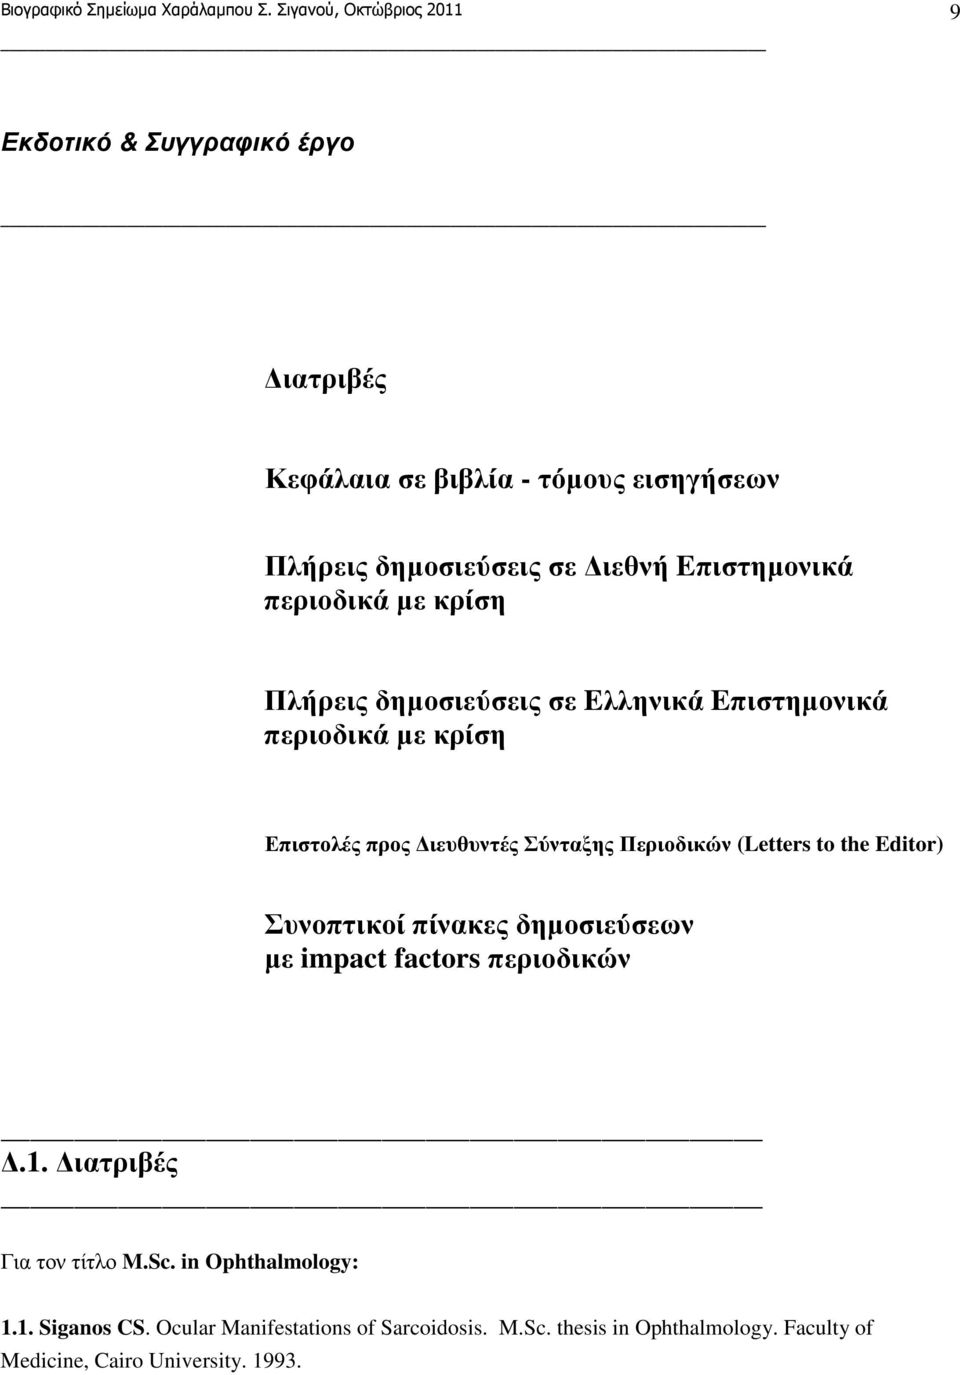 Eπιστηµονικά περιοδικά µε κρίση Πλήρεις δηµοσιεύσεις σε Eλληνικά Eπιστηµονικά περιοδικά µε κρίση Επιστολές προς ιευθυντές Σύνταξης Περιοδικών